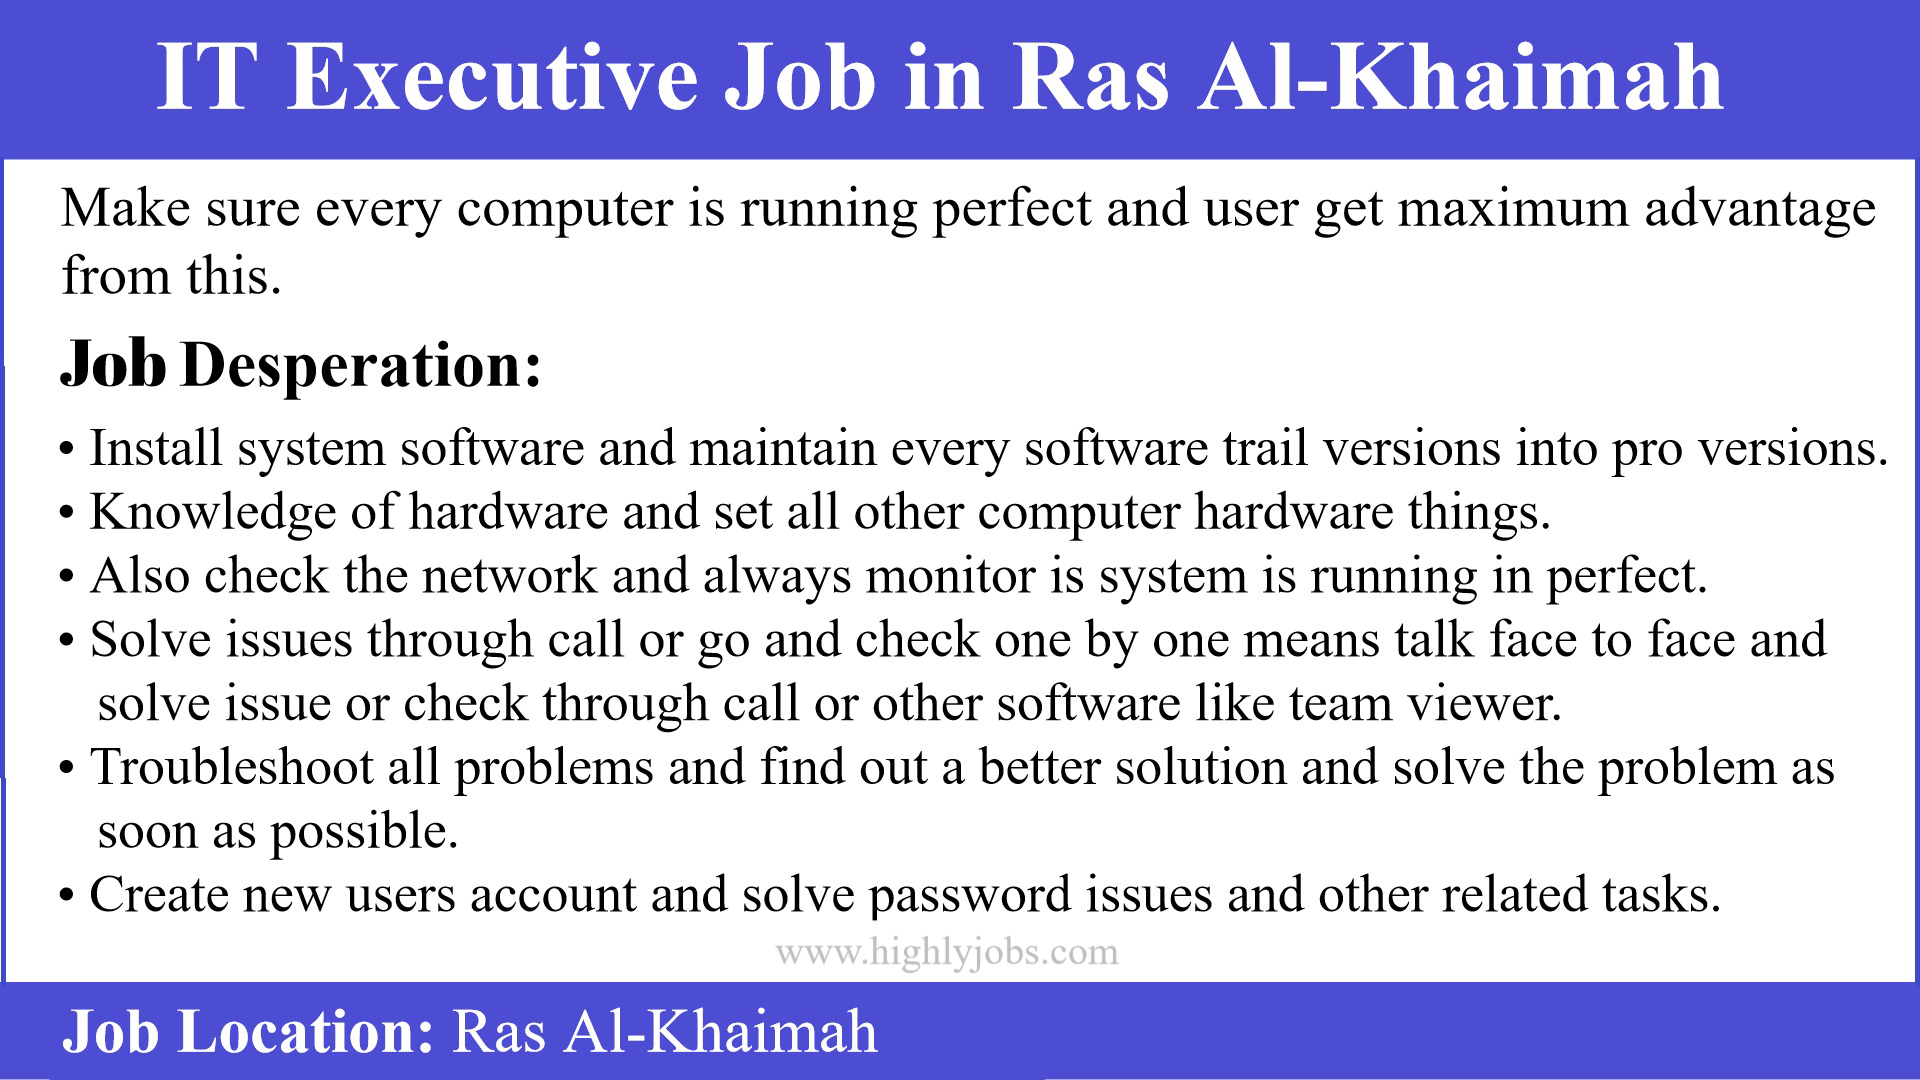 IT Executive Job in Ras Al-Khaimah